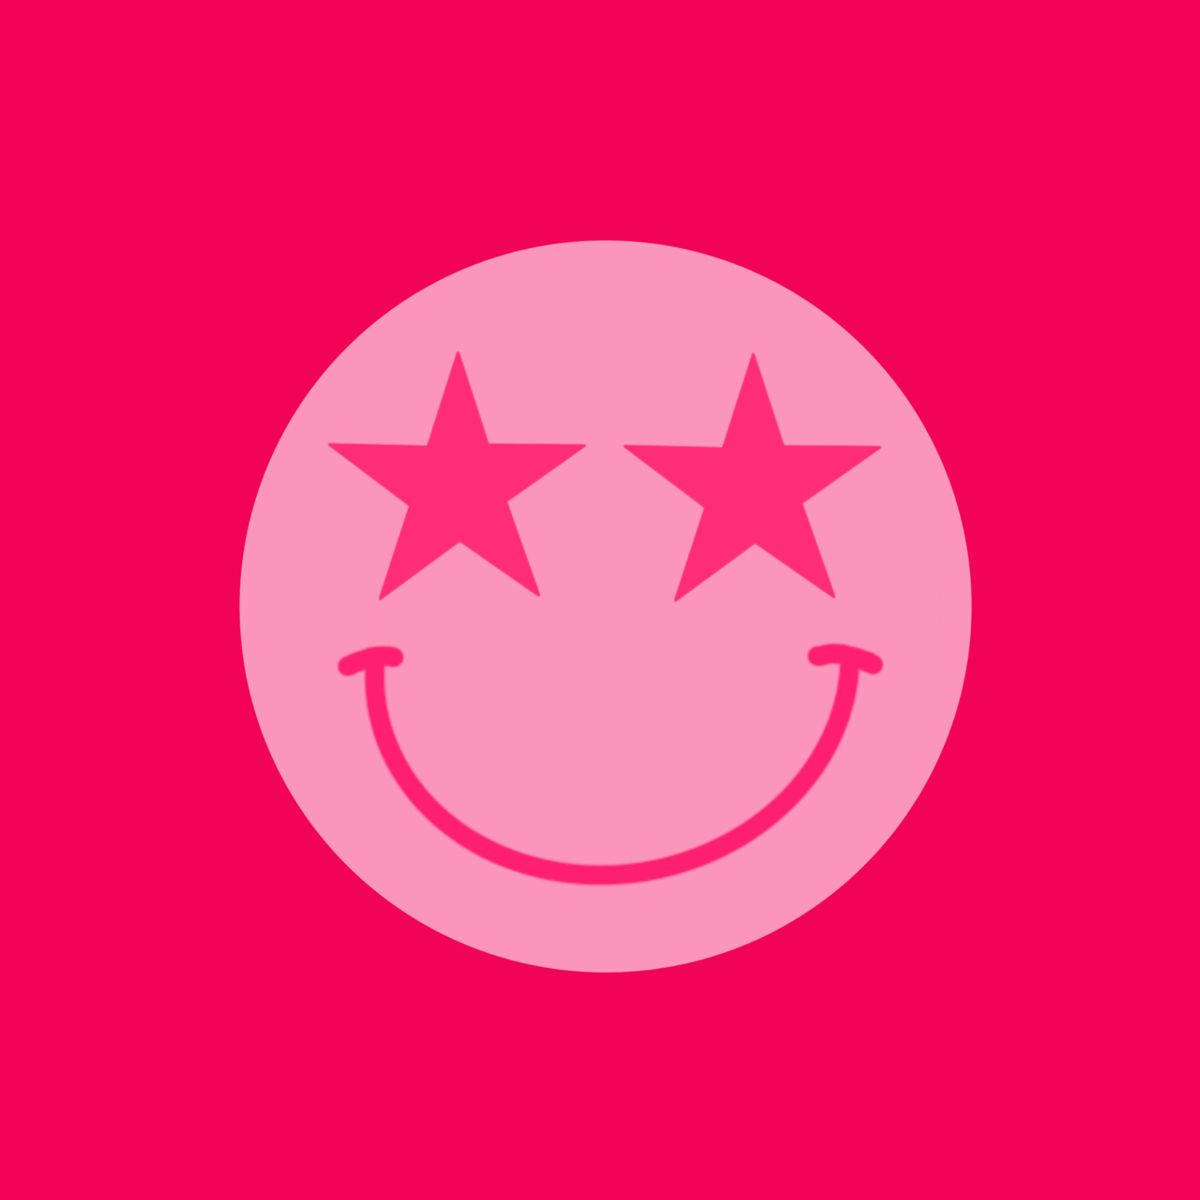 Free Preppy Smiley Face Wallpaper Downloads, Preppy Smiley Face Wallpaper for FREE